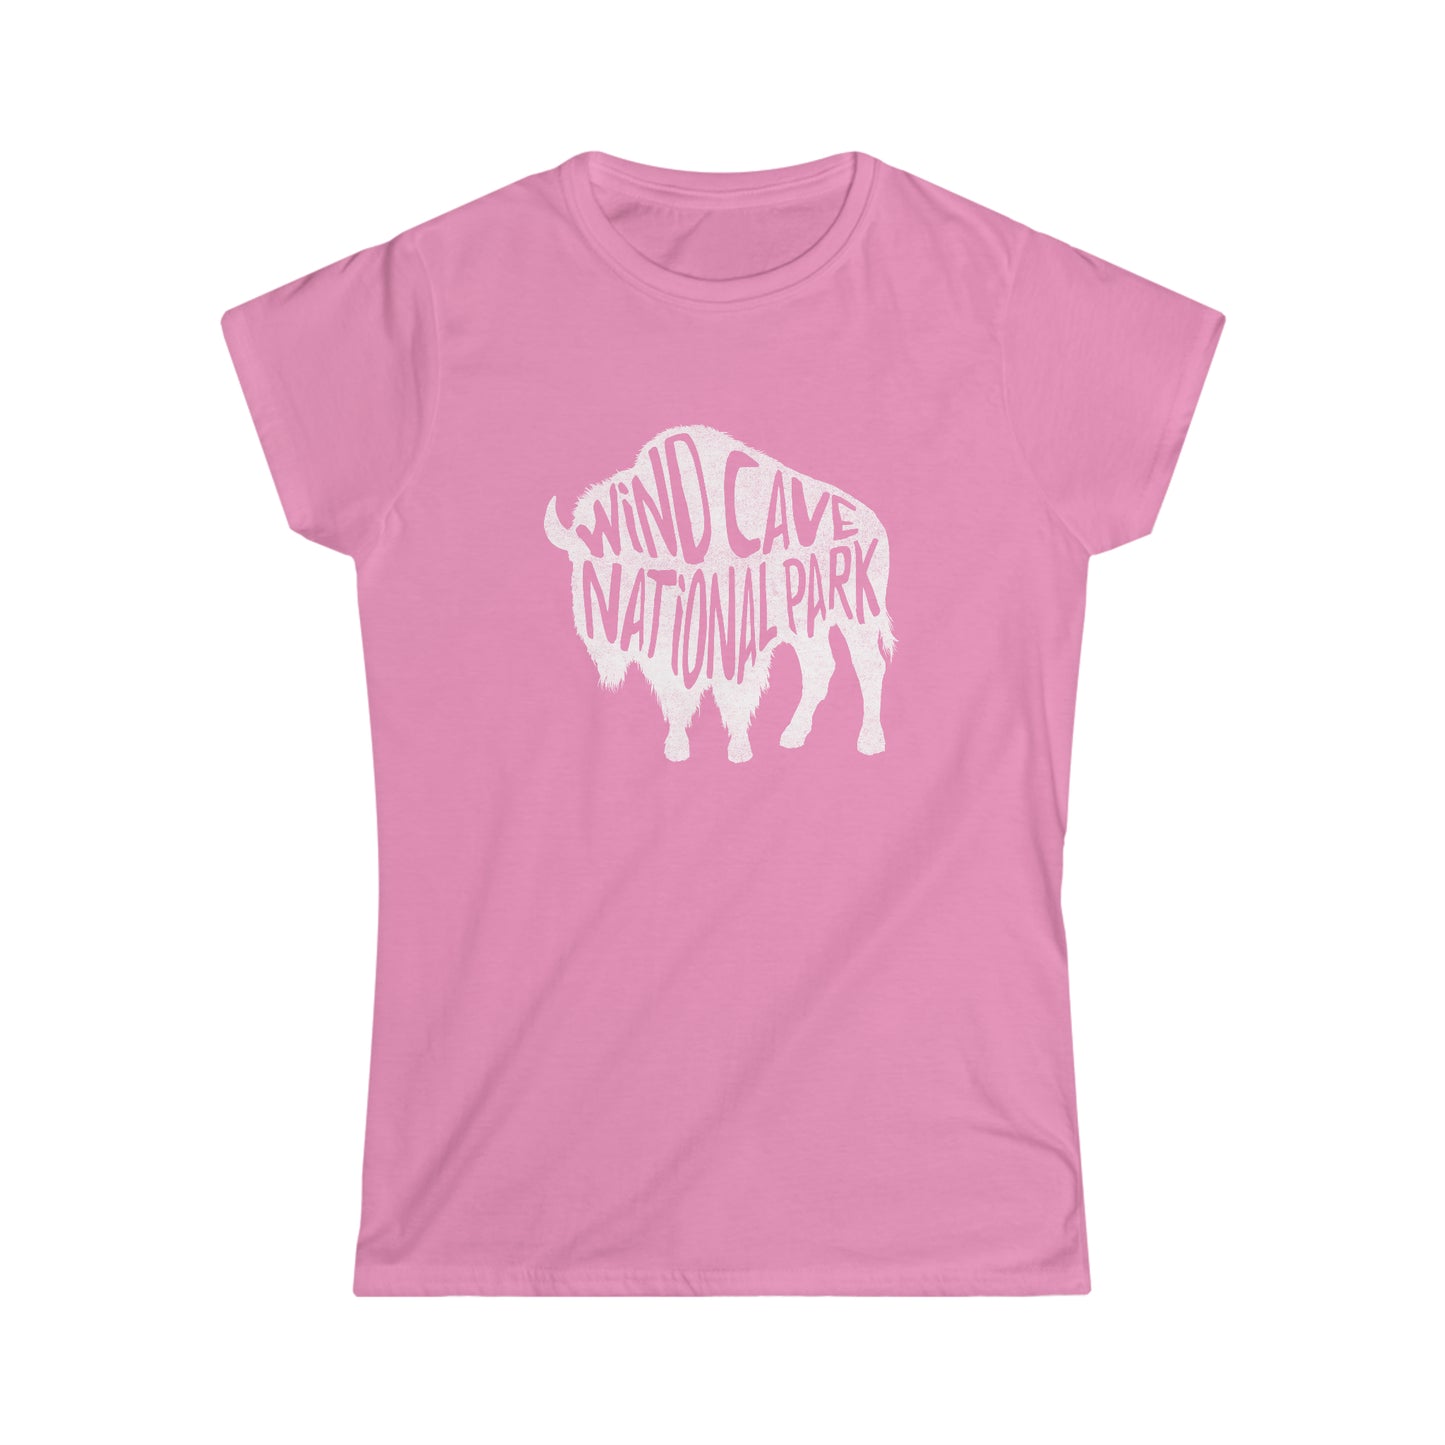 Wind Cave National Park Women's T-Shirt - Bison